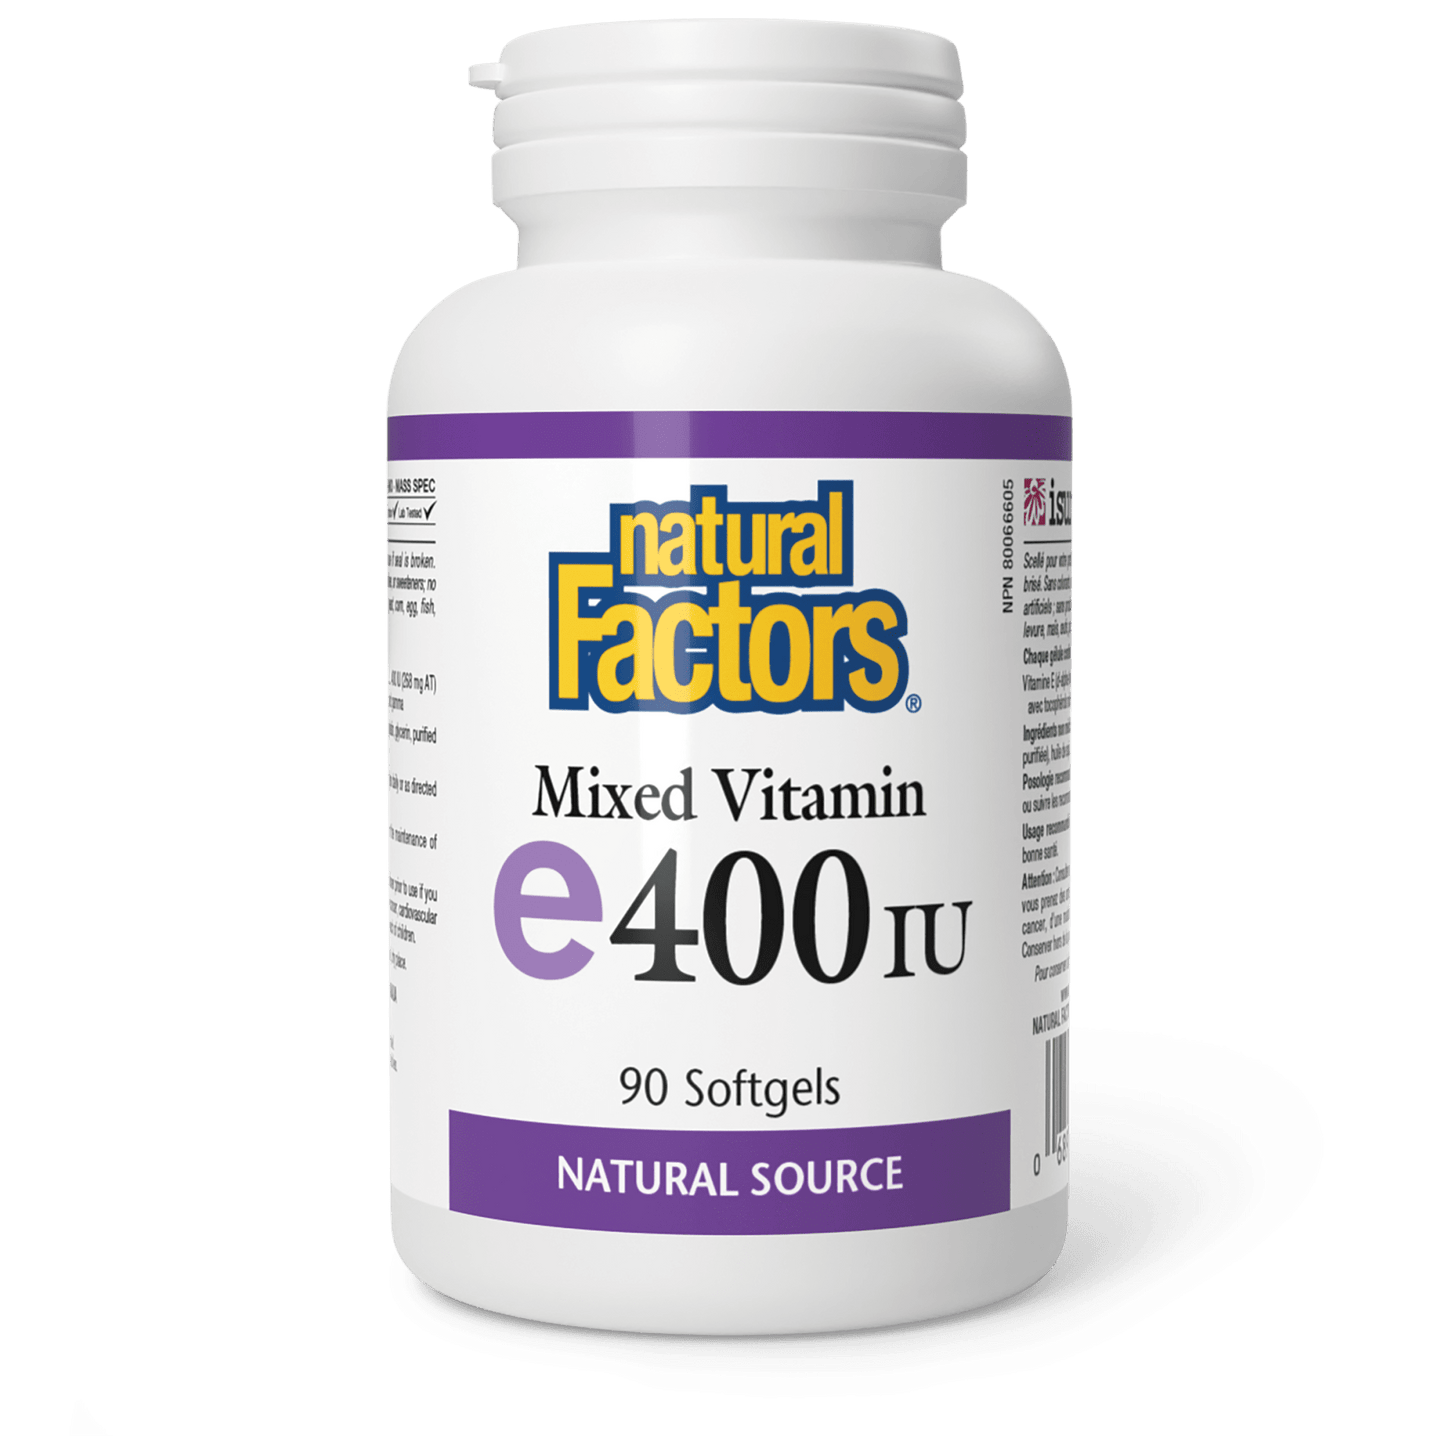 Mixed Vitamin E 400 IU, Natural source, Natural Factors|v|image|1421